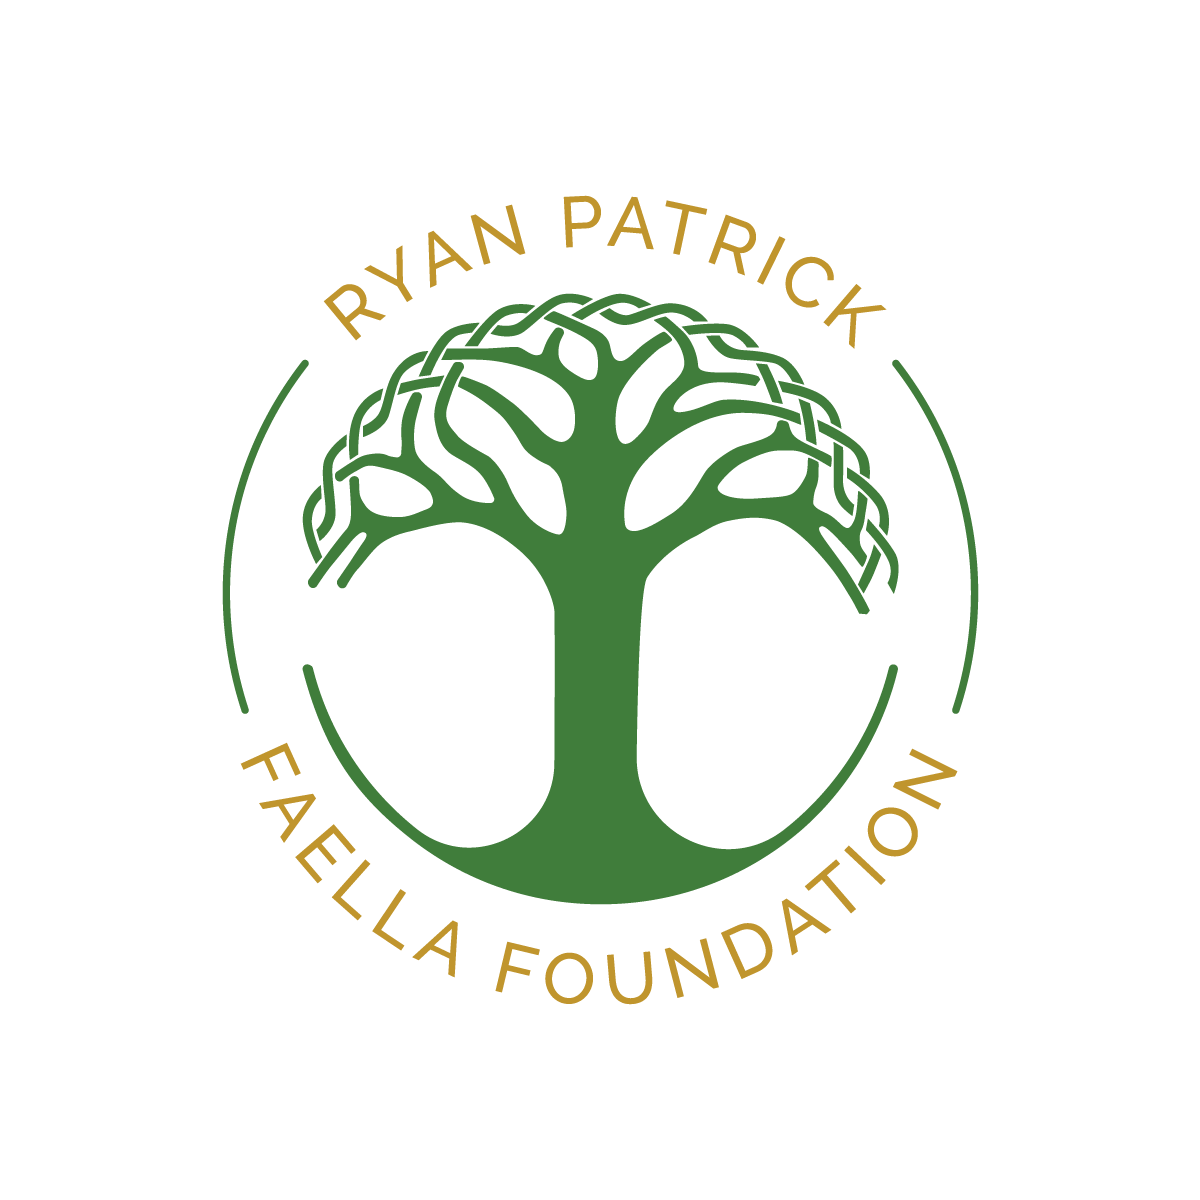 Ryan Patrick Faella Foundation